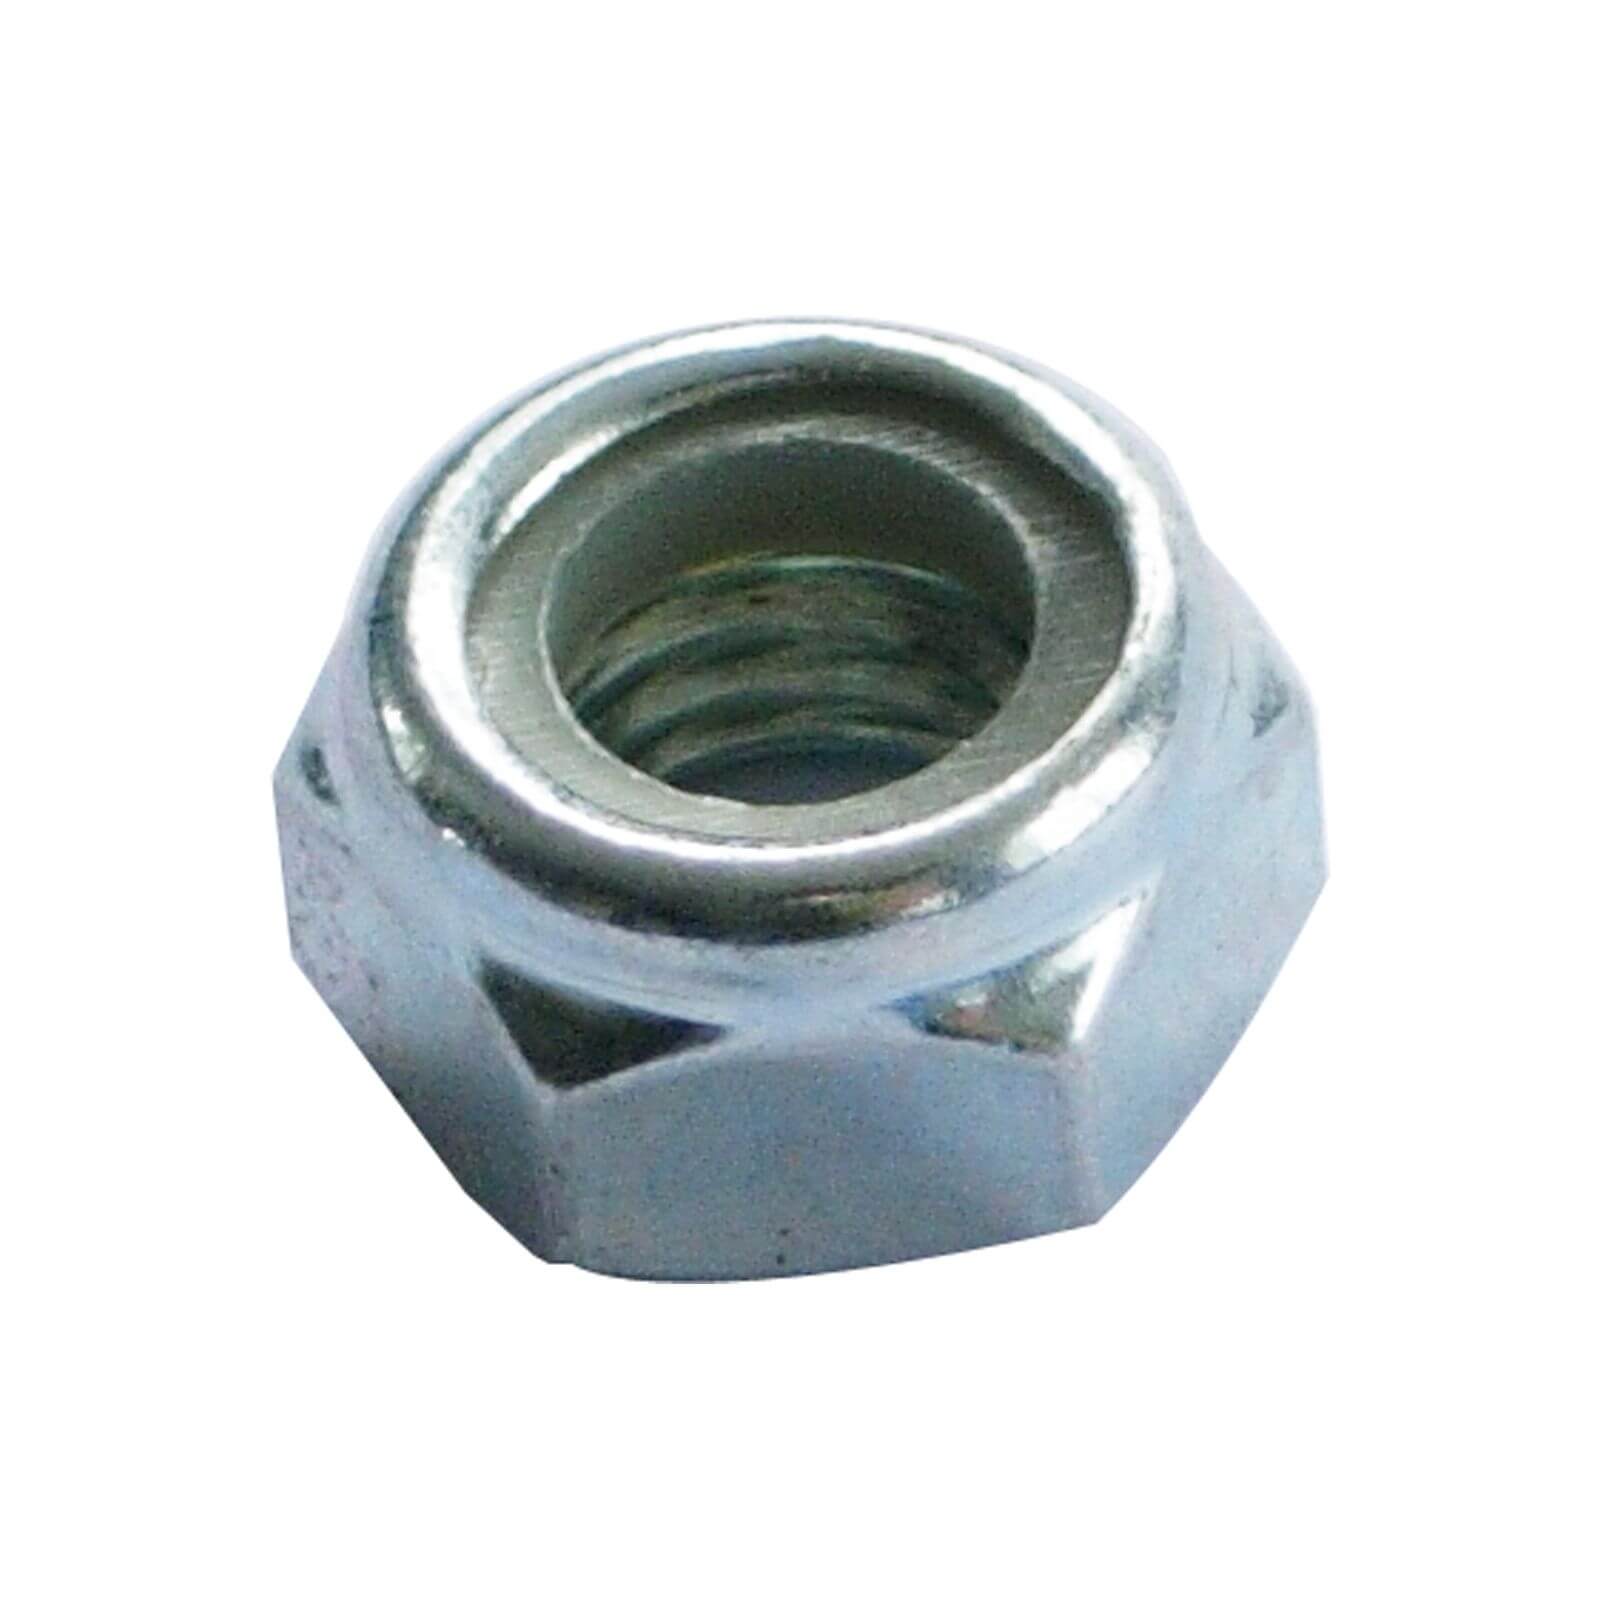 Locking Nut - Bright Zinc Plated - M10 - 10 Pack